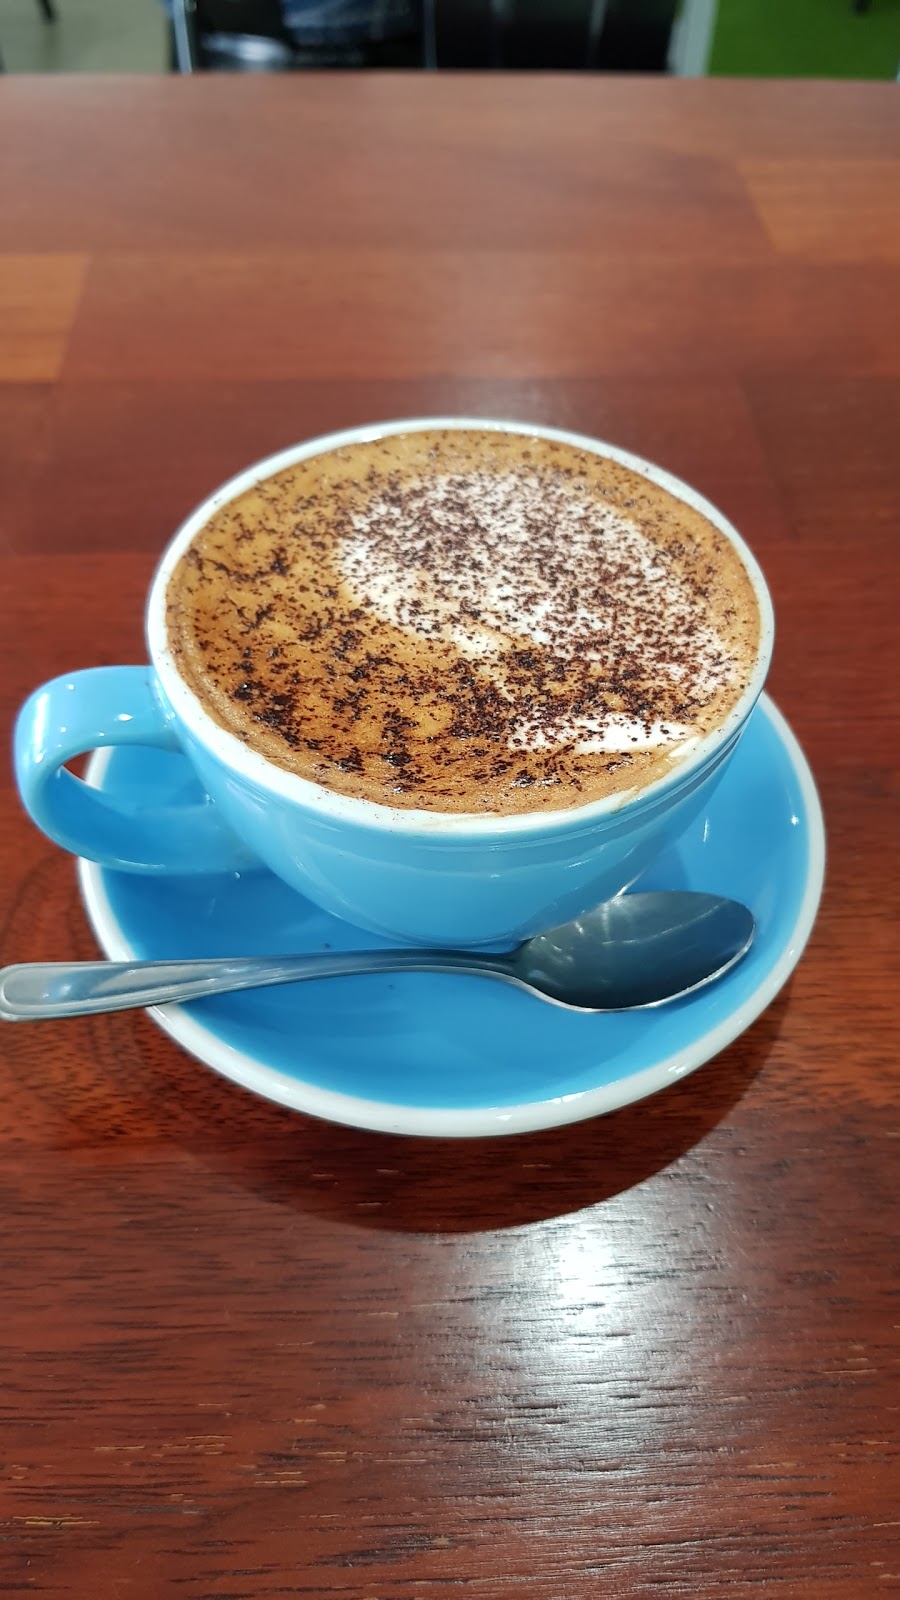 Tommy & E Specialty Coffee | 33-35 Progress Rd, Burpengary QLD 4505, Australia | Phone: 0431 242 510